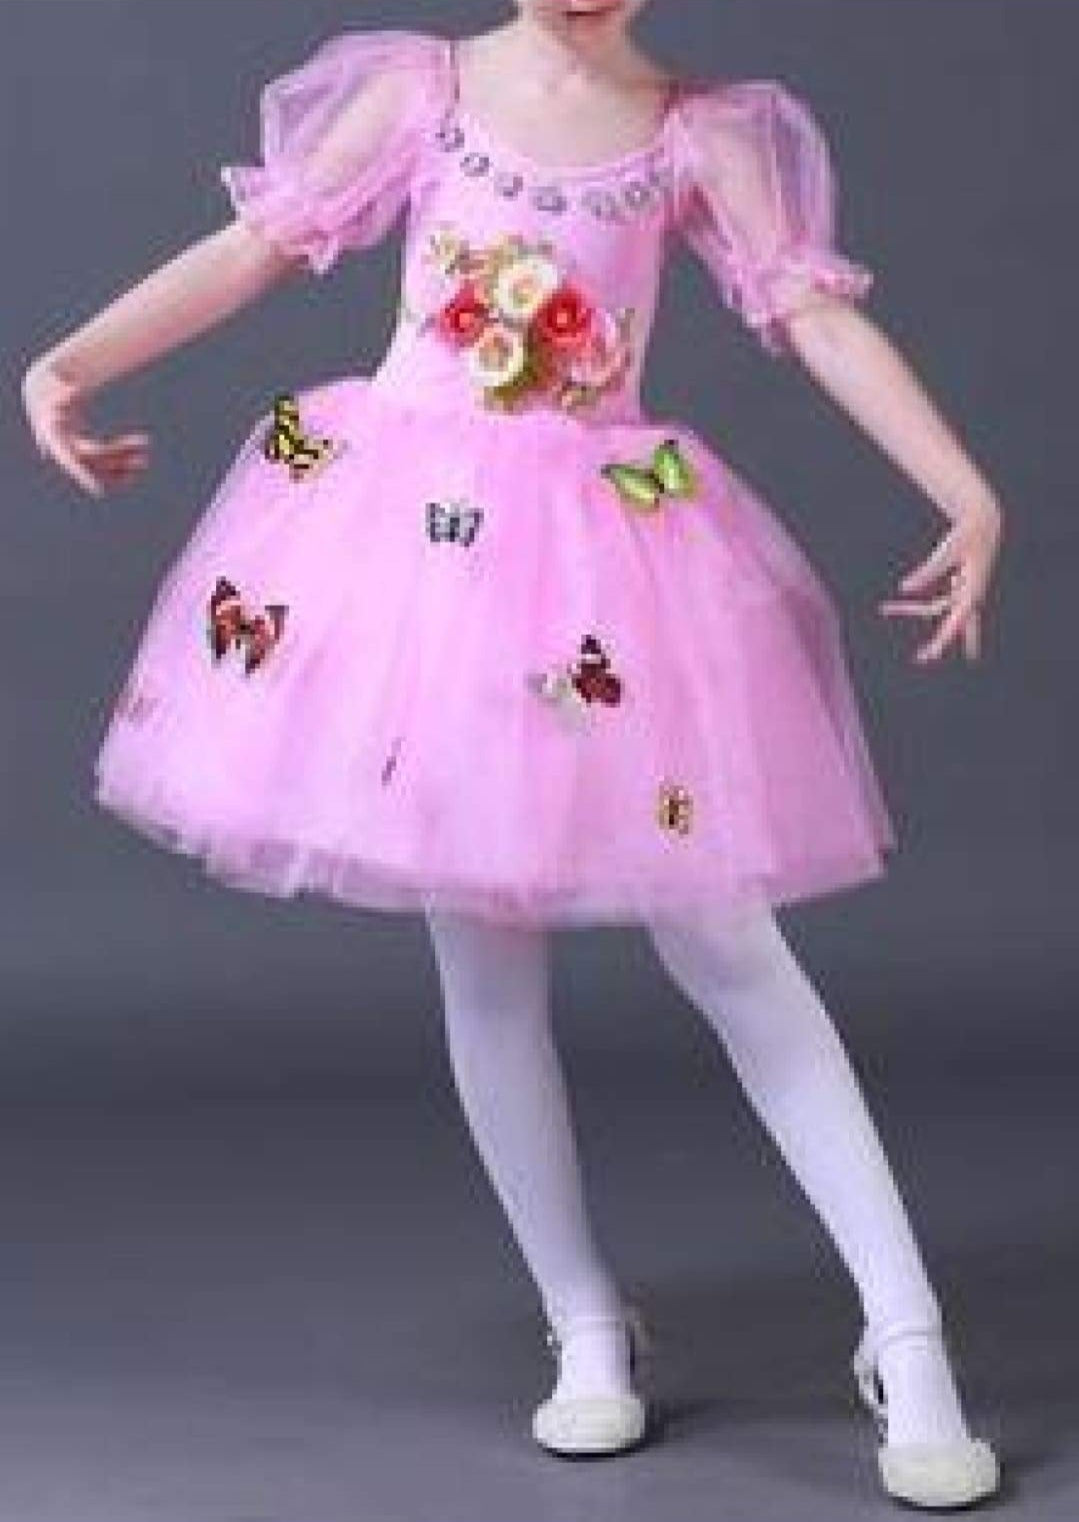 Girls Pink Flower Garden Fairy Halloween Costume - Girls Halloween Costume